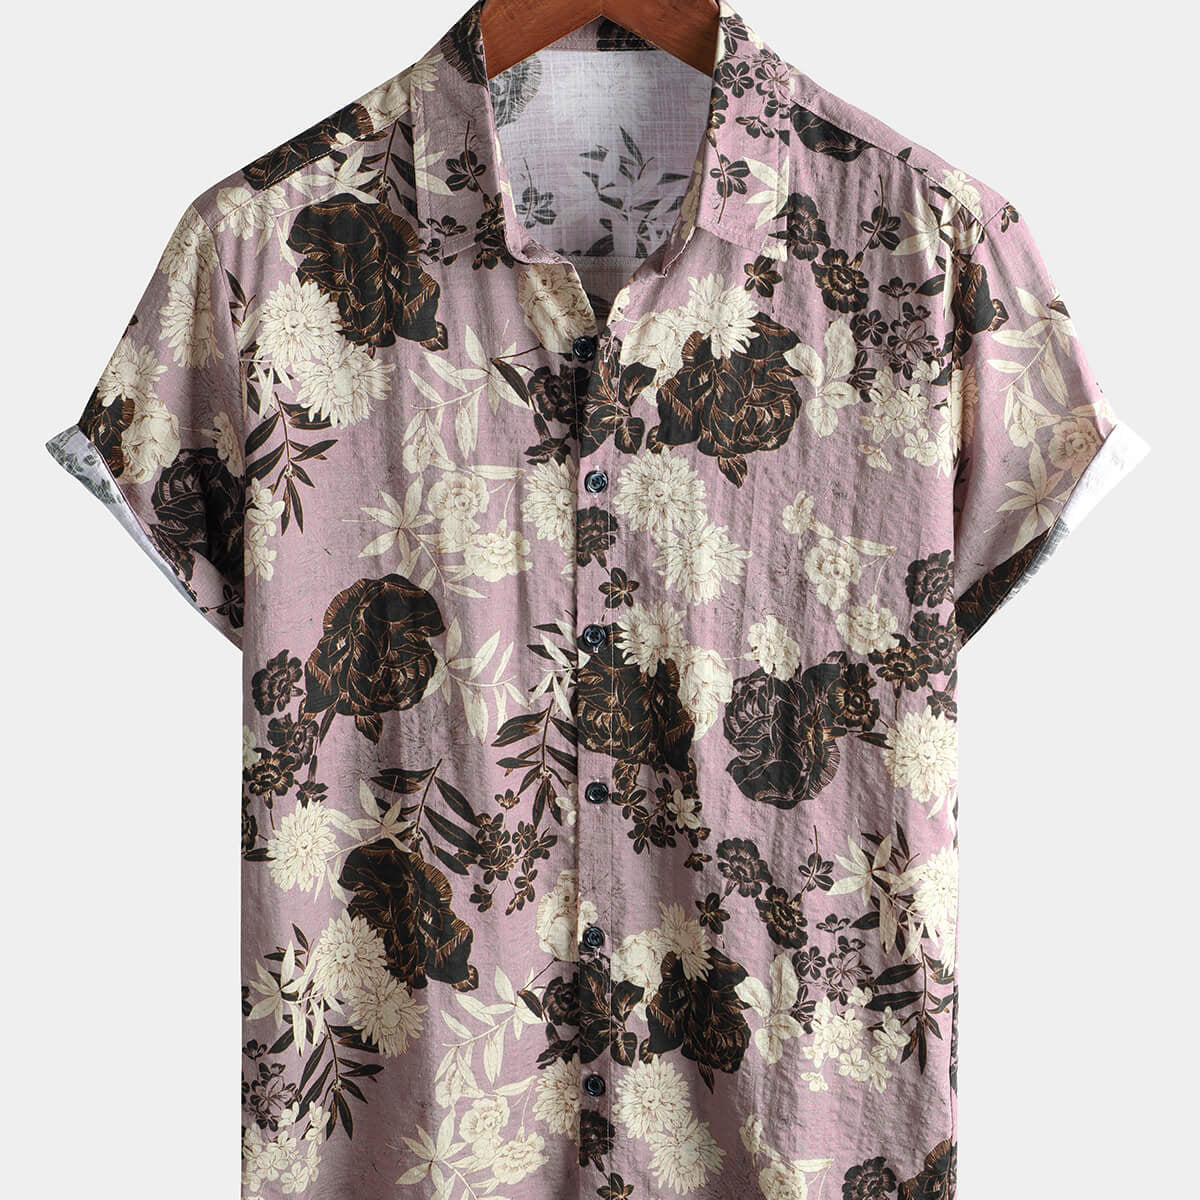 Men's Vintage Floral Summer Beach Short Sleeve Shirt